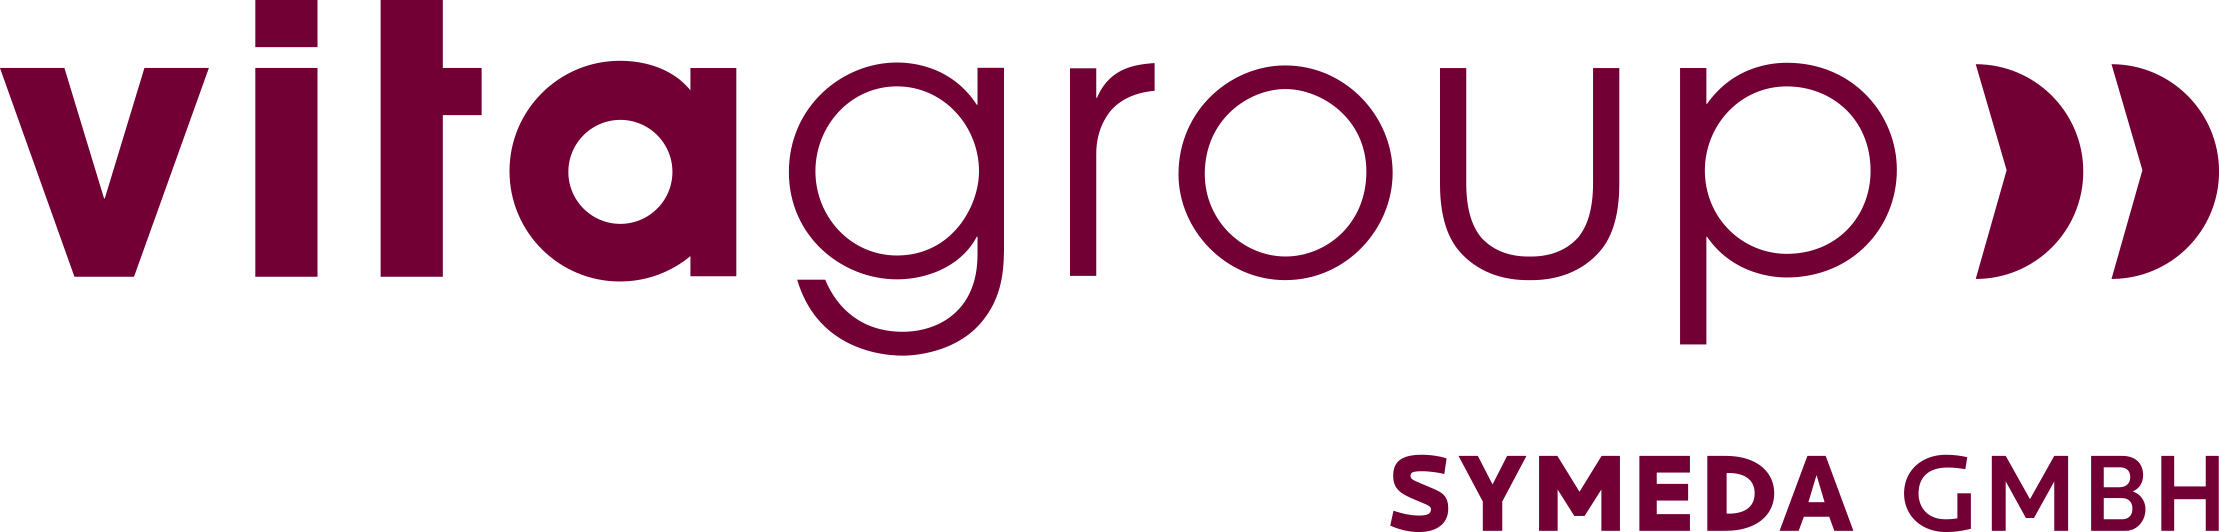 vitagroup logo